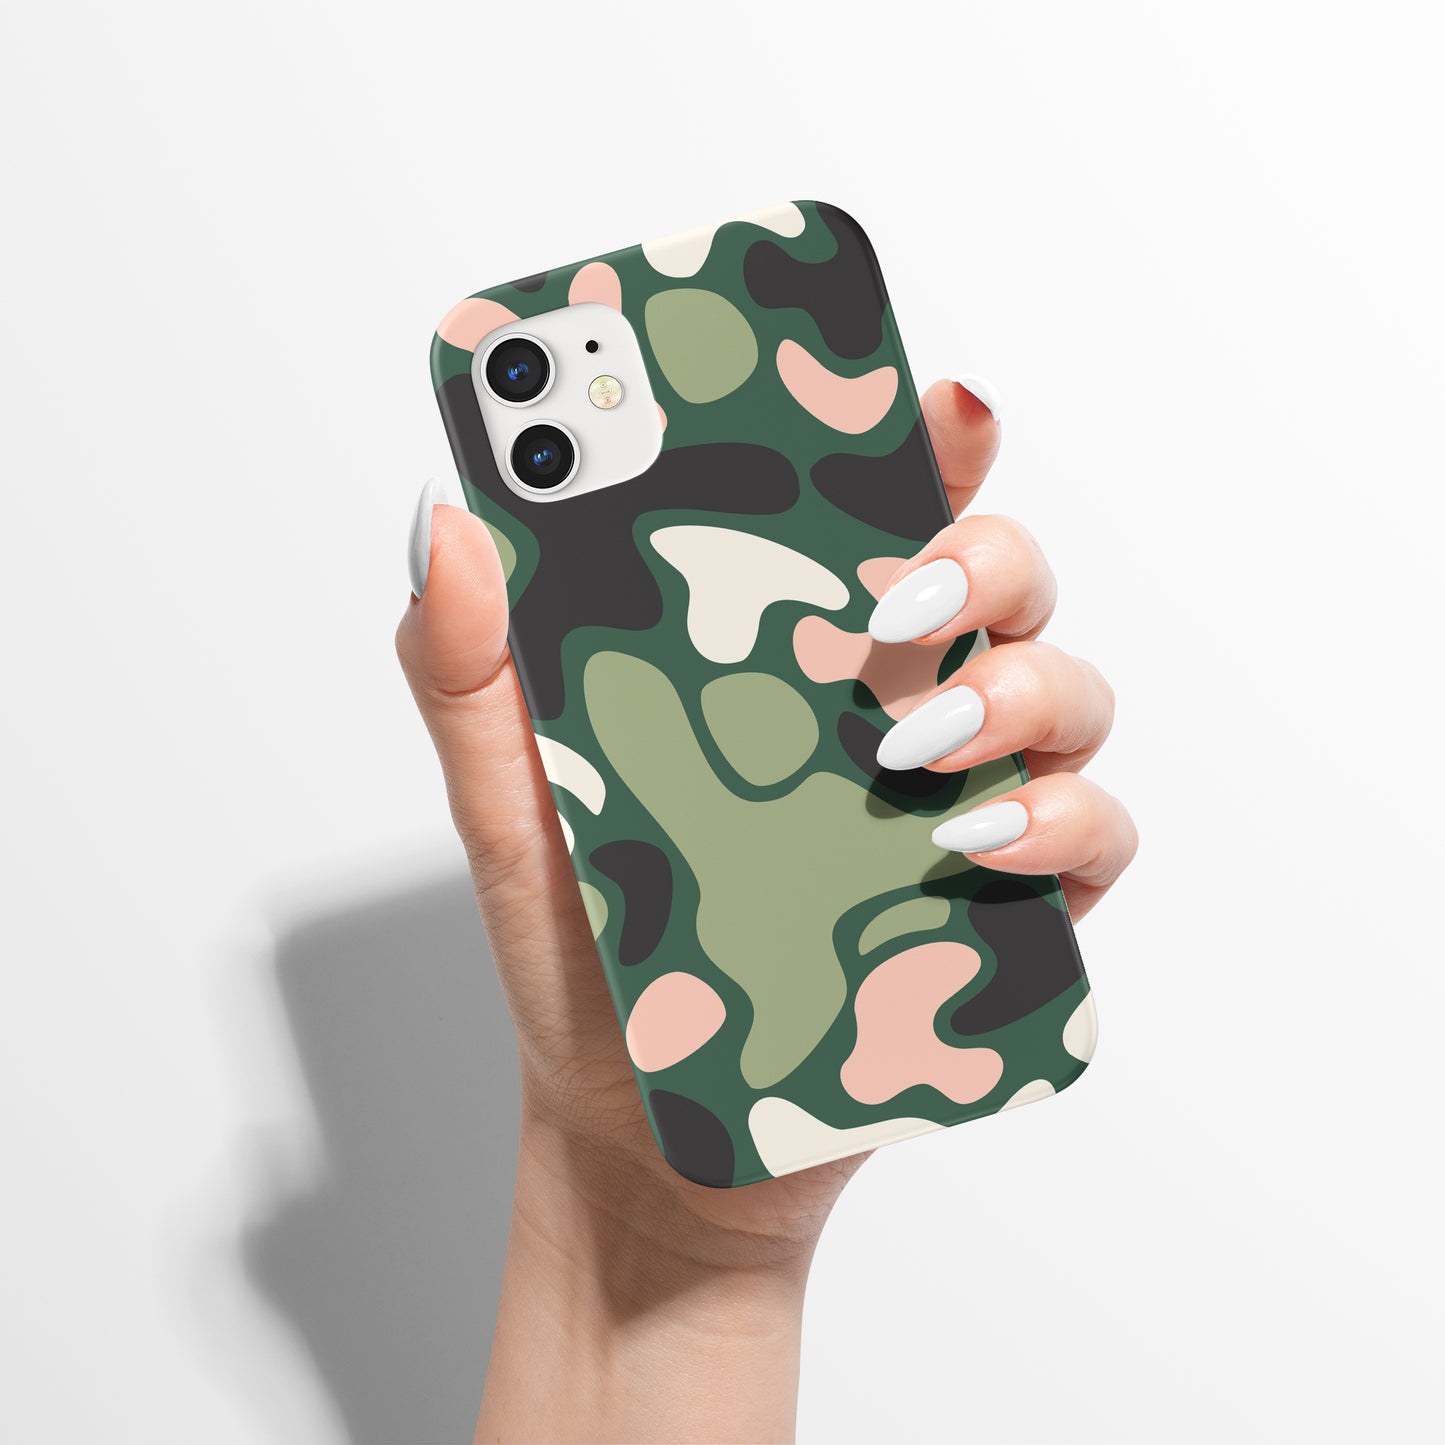 Modern Moro Camuflage Pattern iPhone Case